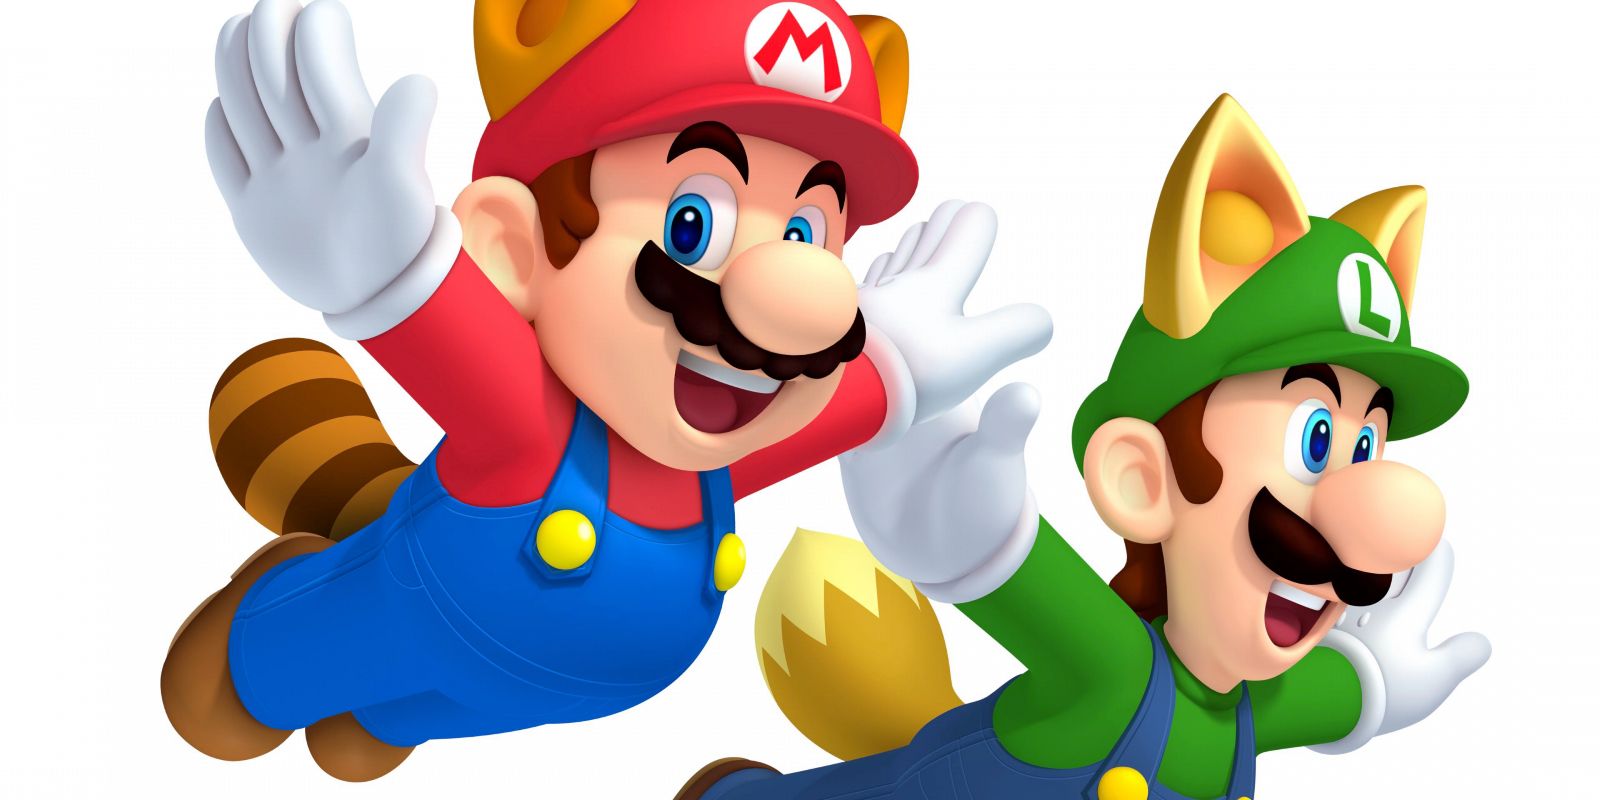 Detail Images Of Luigi And Mario Nomer 14